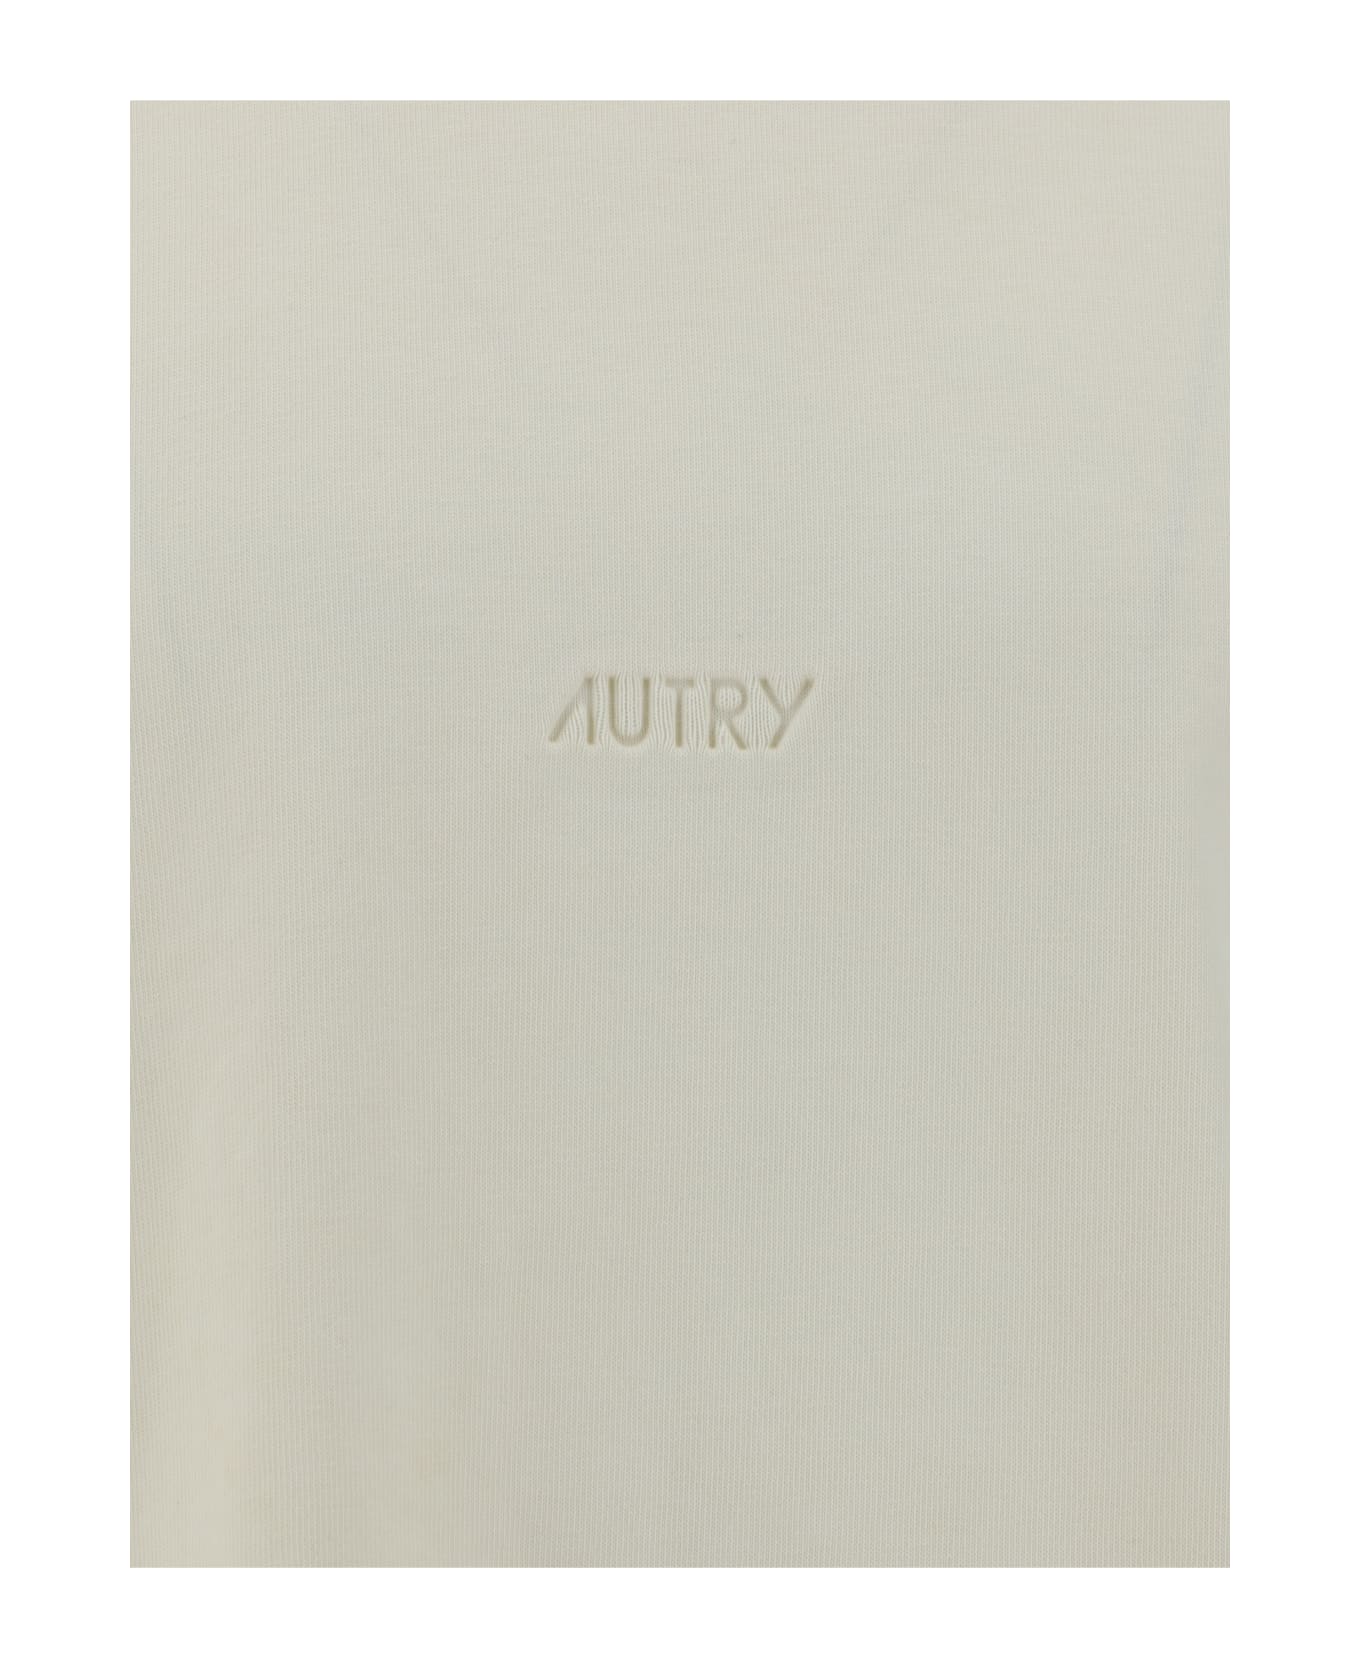 Autry T-shirt - Cream シャツ